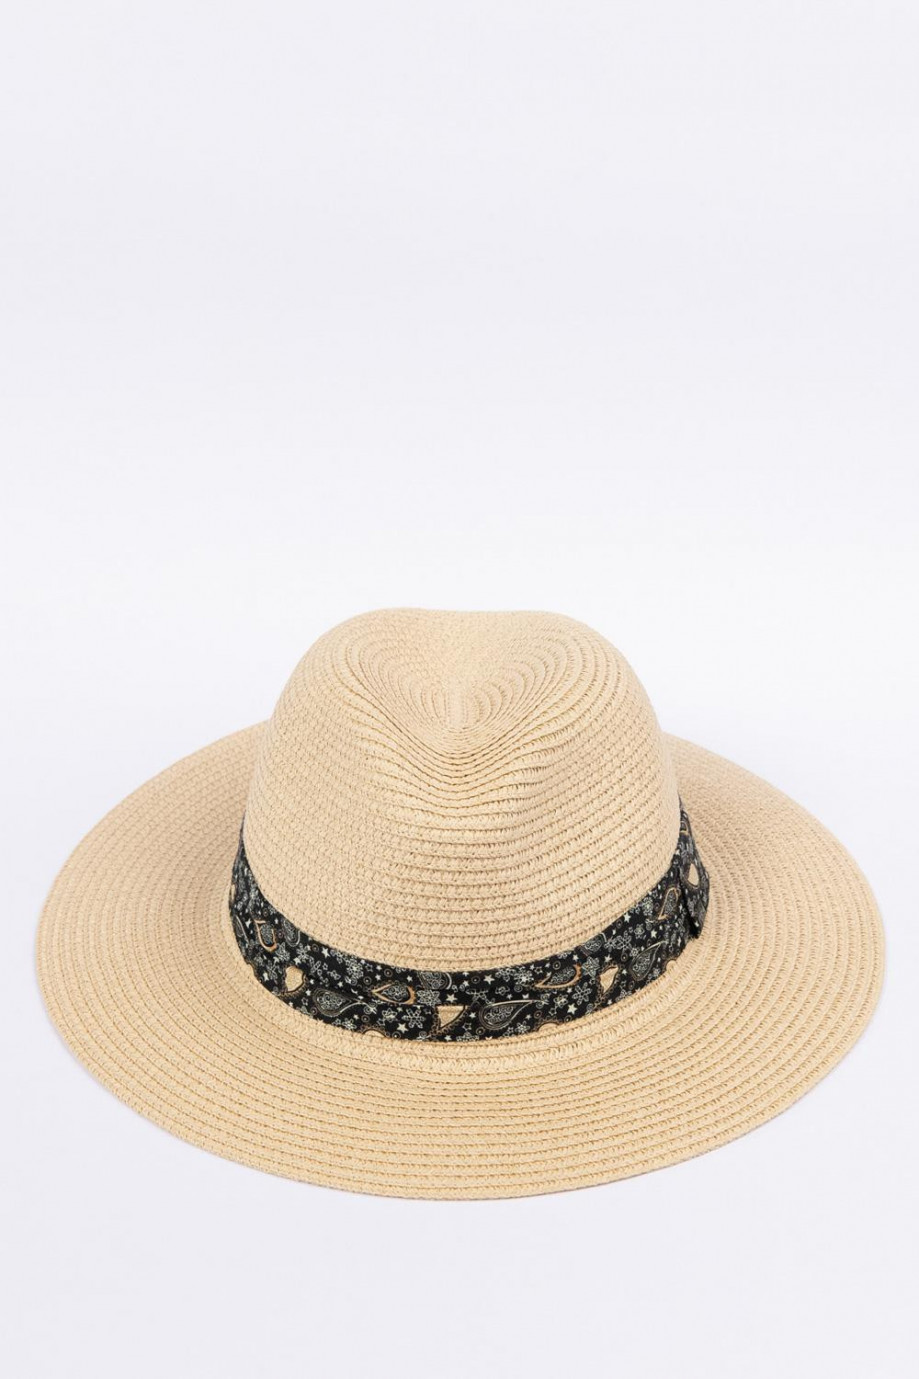 Sombrero tejido kaky claro con cinta negra decorativa